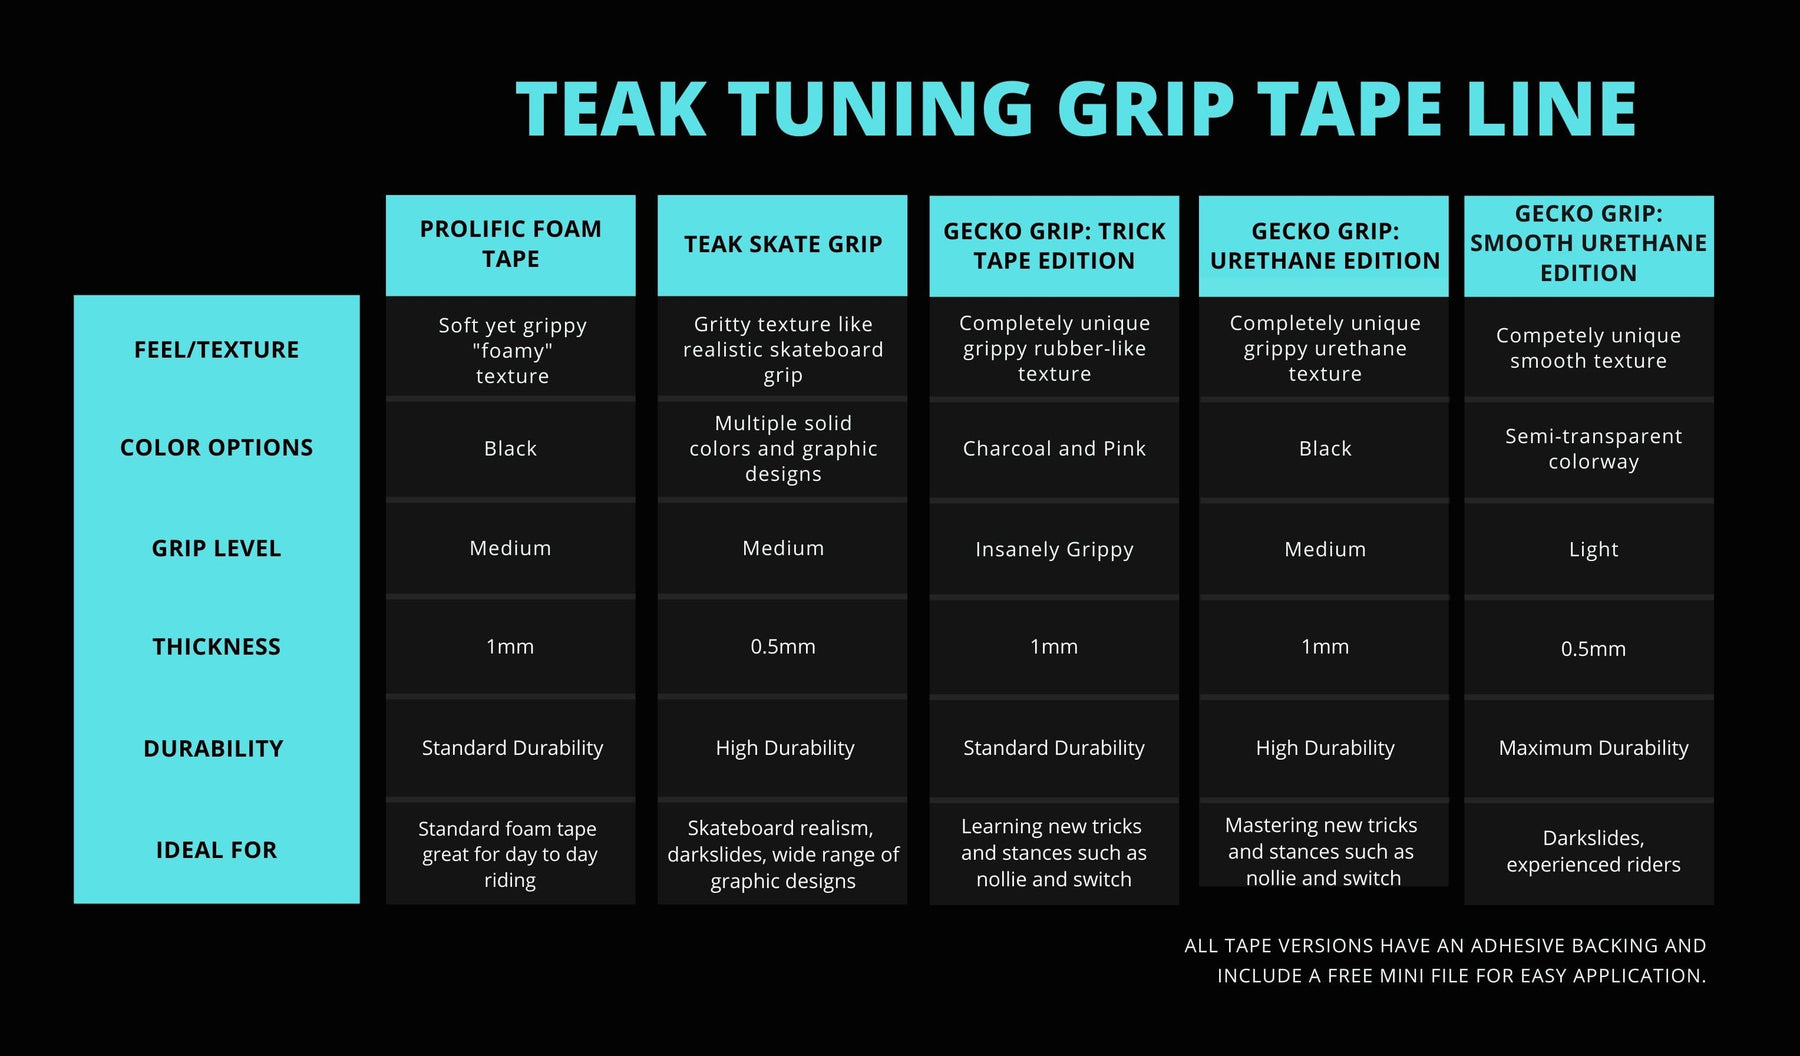 Gecko Grip Tape, Smooth Urethane Edition (Semi-Transparent) - 35mm x 1 – Teak  Tuning Pro Fingerboards